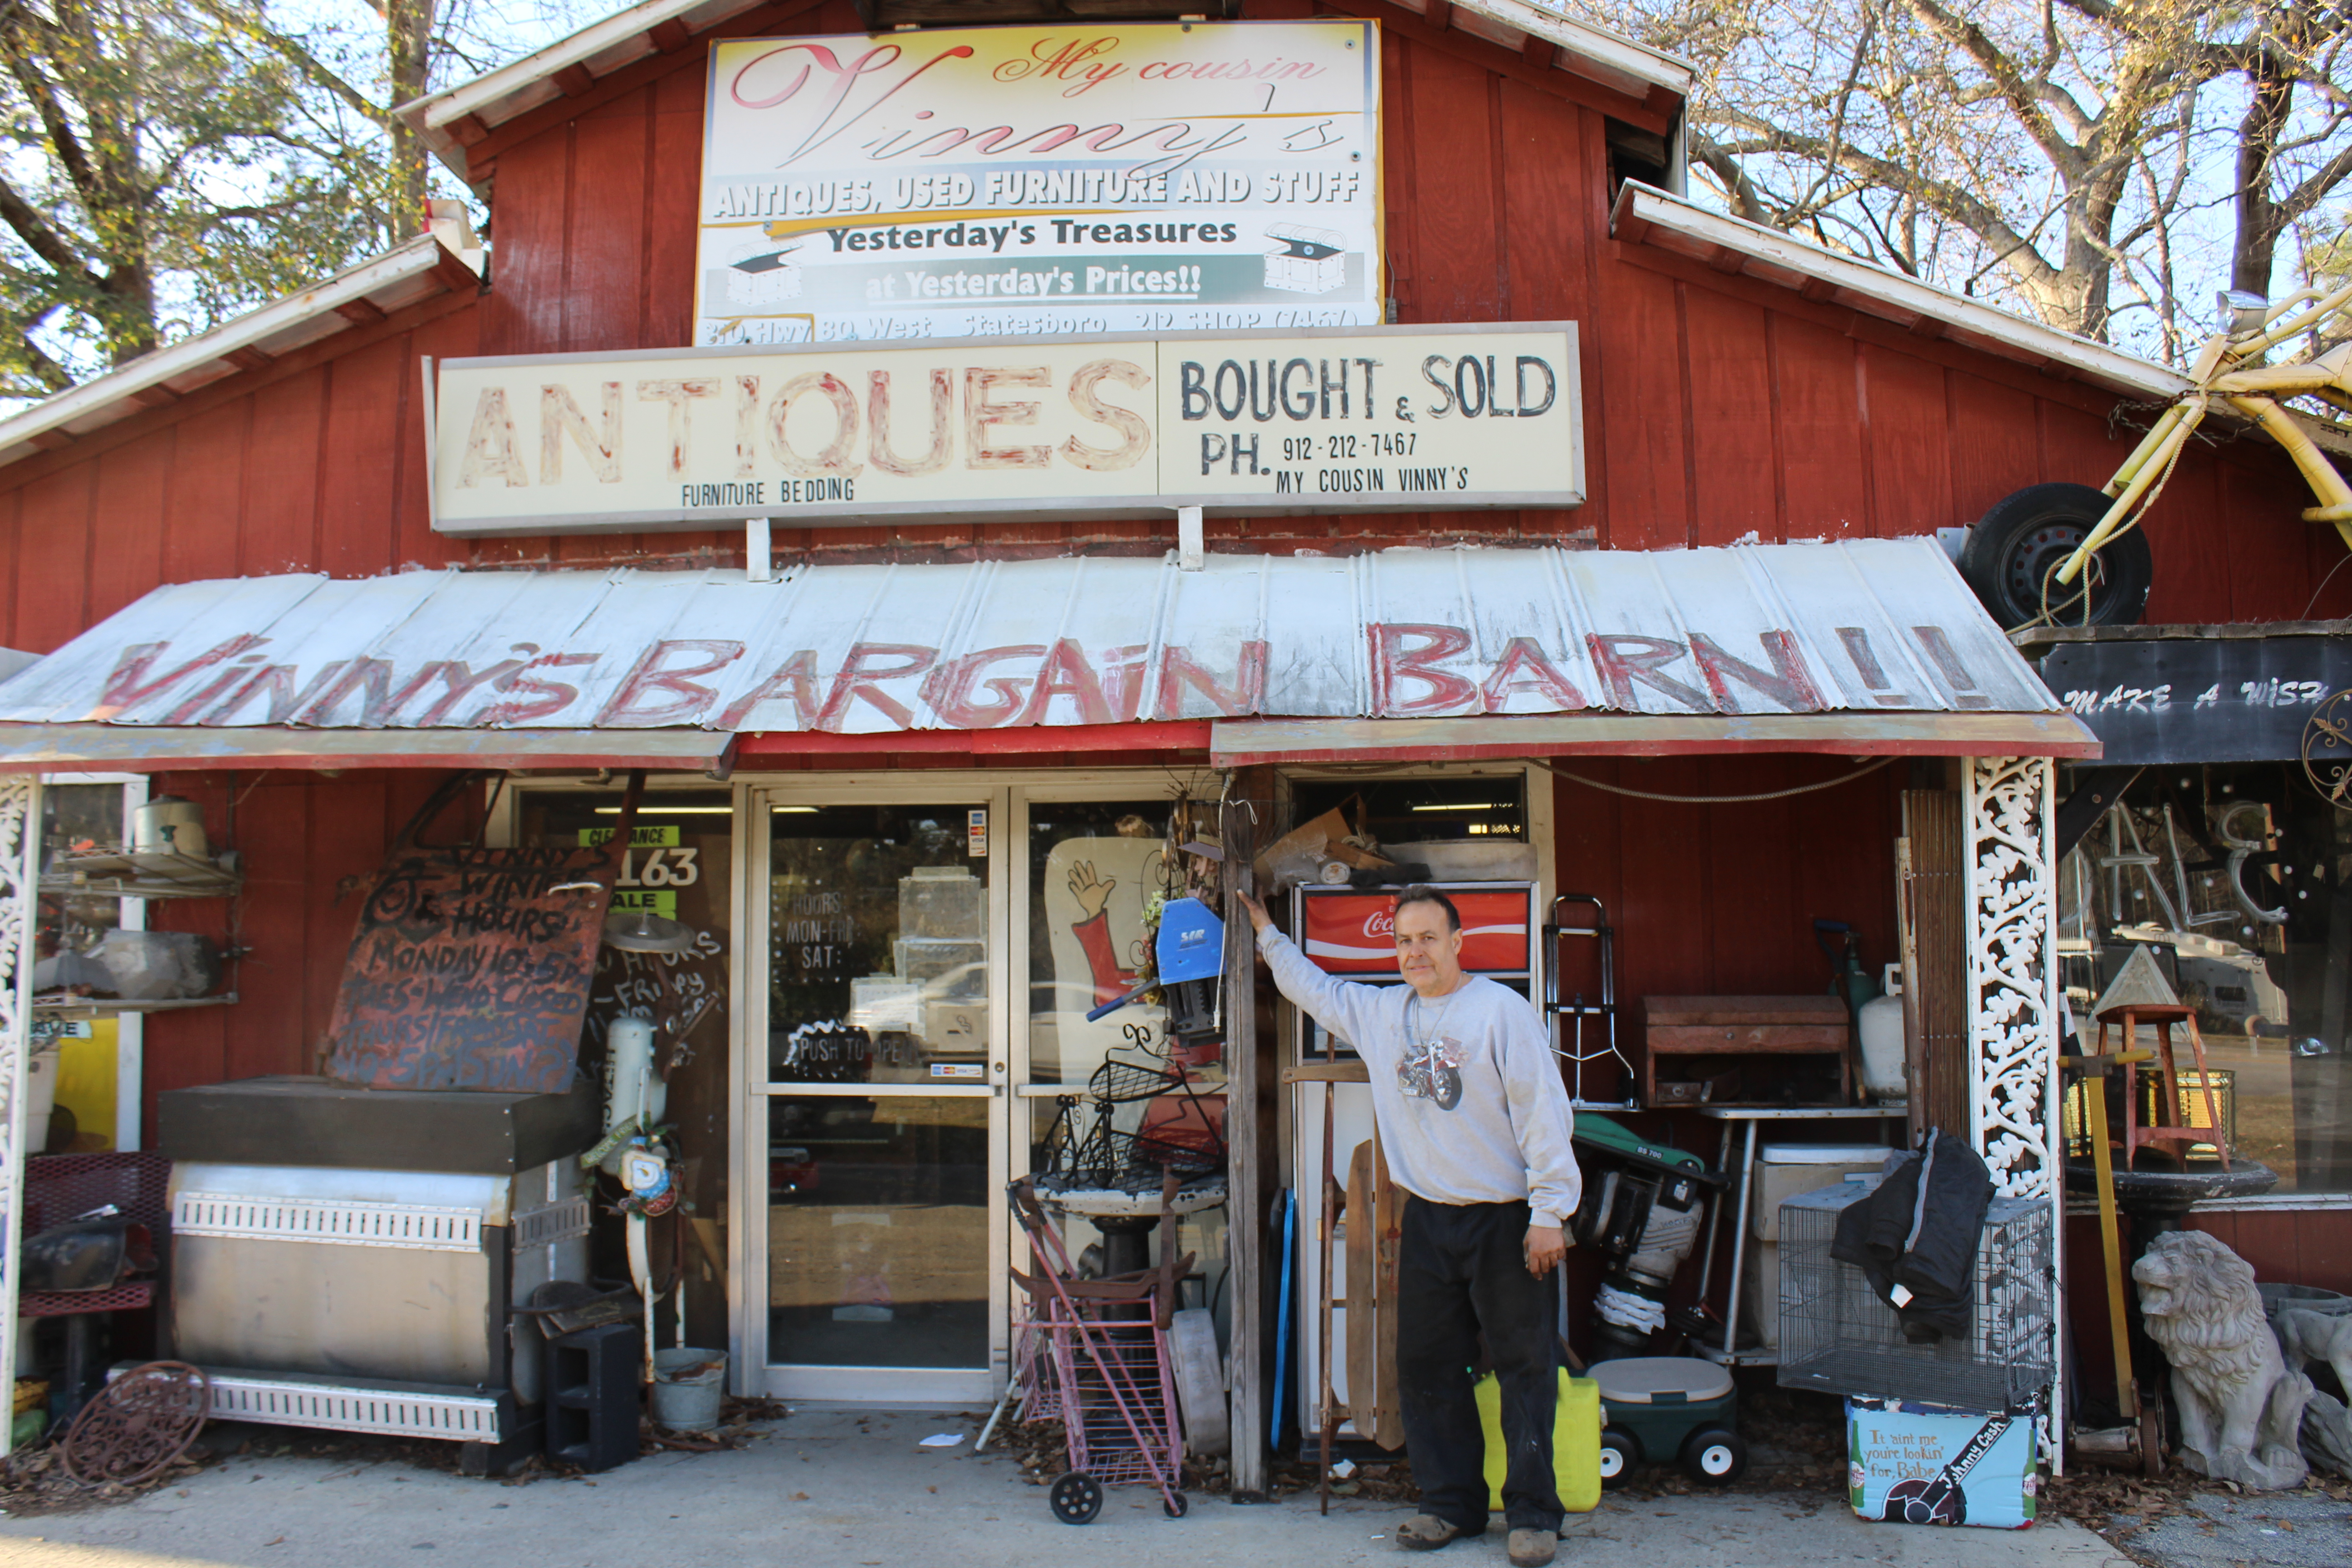 The Georgia picker: The man behind My Cousin Vinny’s Bargain Barn